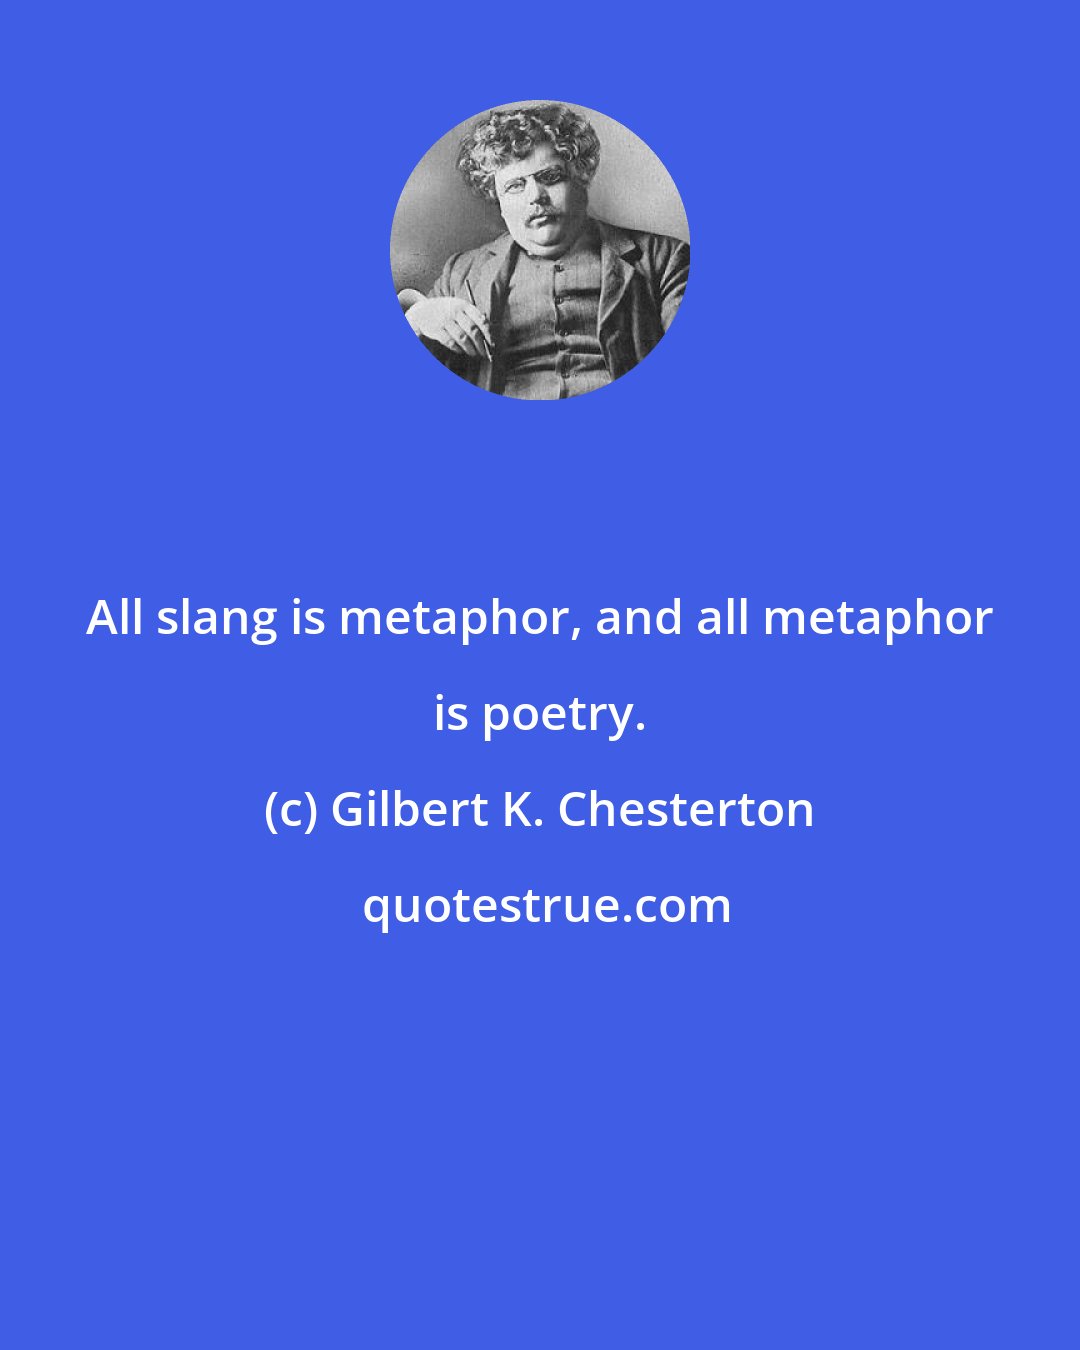 Gilbert K. Chesterton: All slang is metaphor, and all metaphor is poetry.